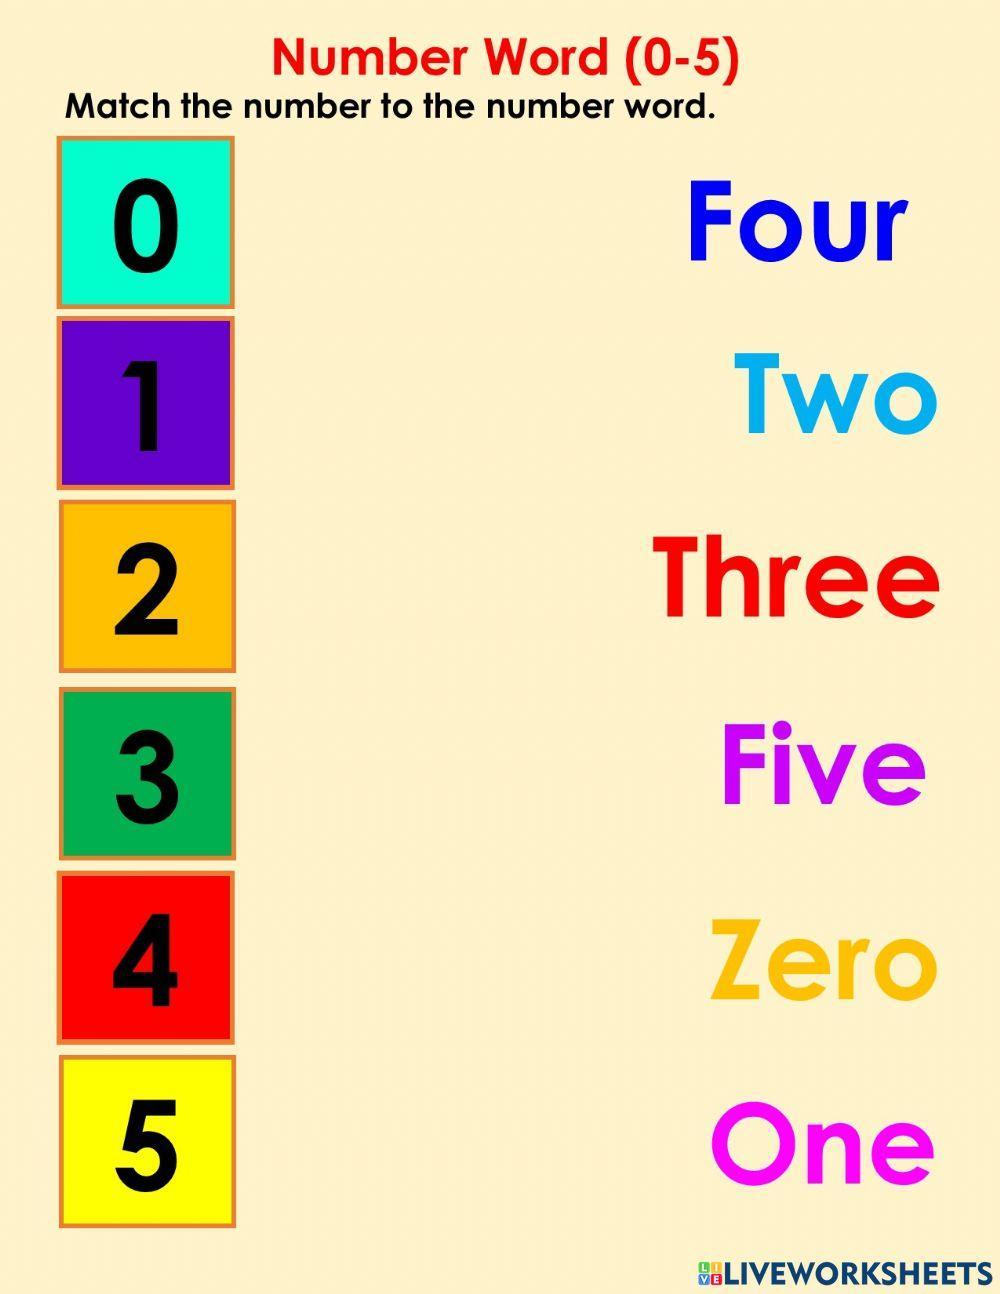 Number Word (0-5)